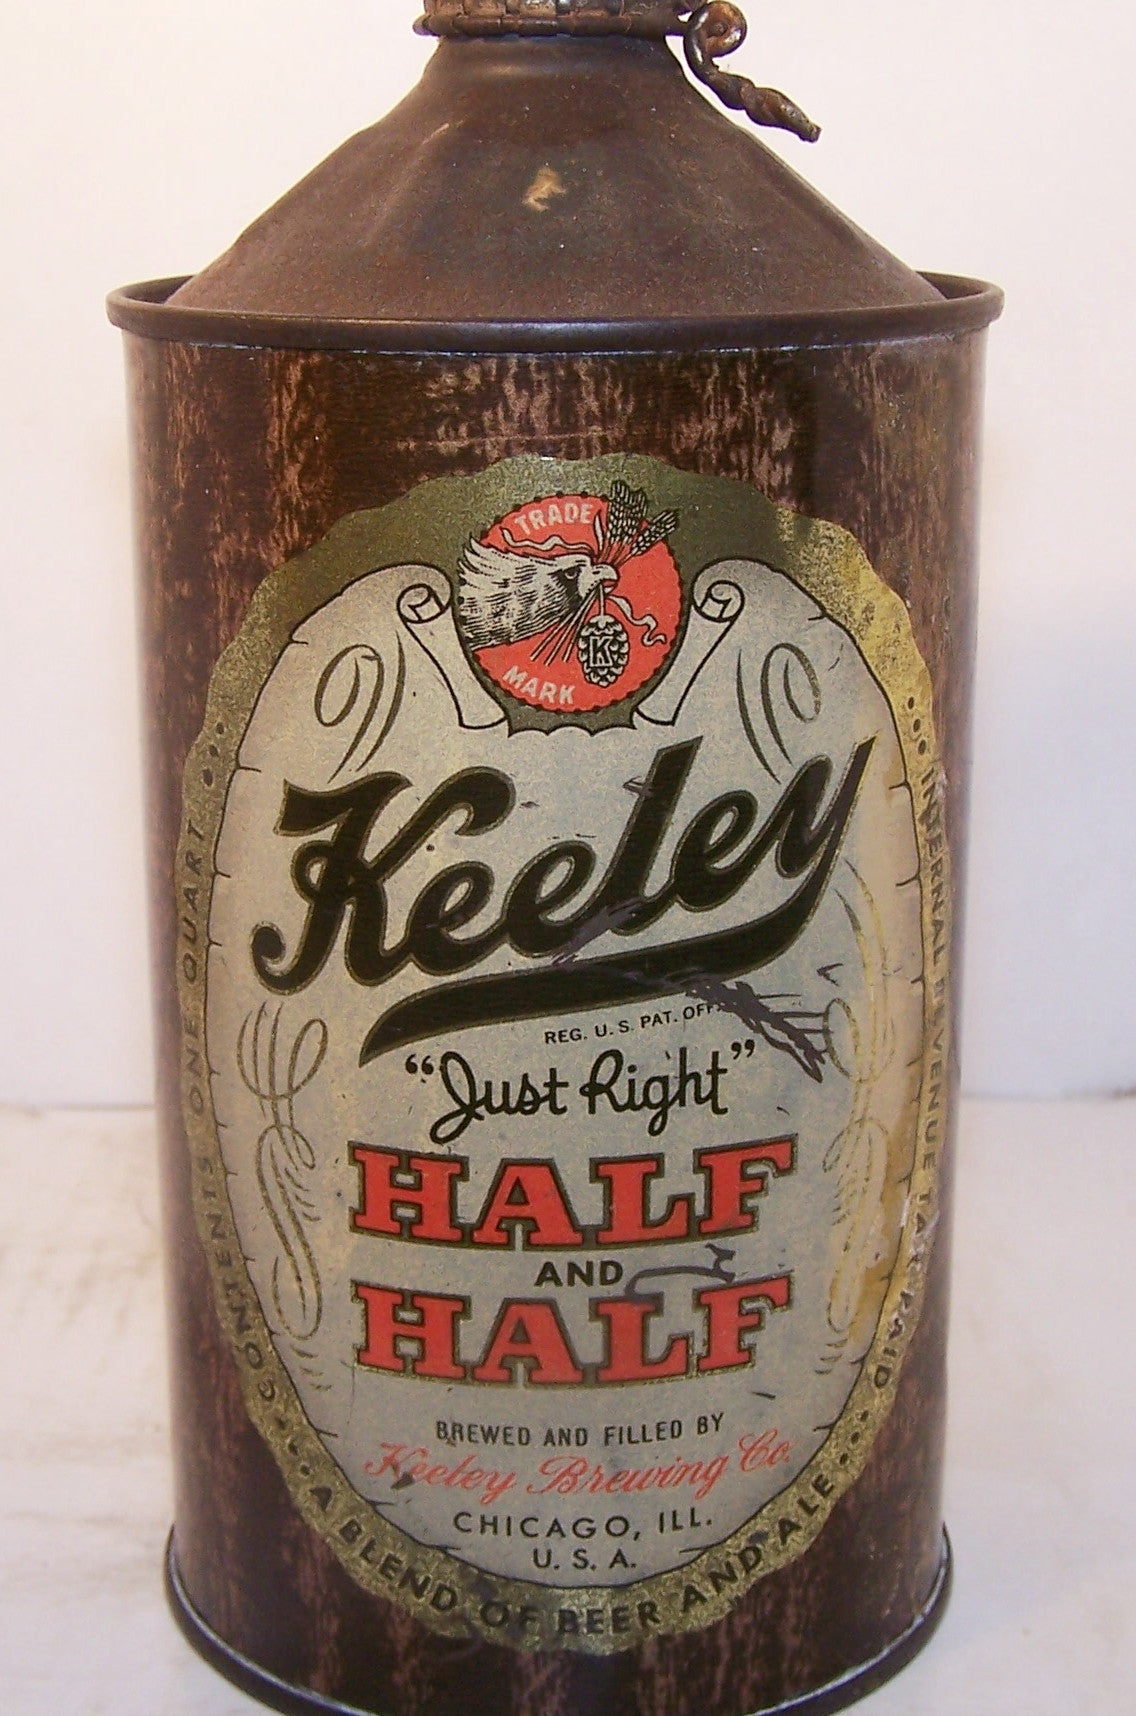 Keeley Half and half "Just Right" USBC 213-1, Grade 1-sold 8/5/16